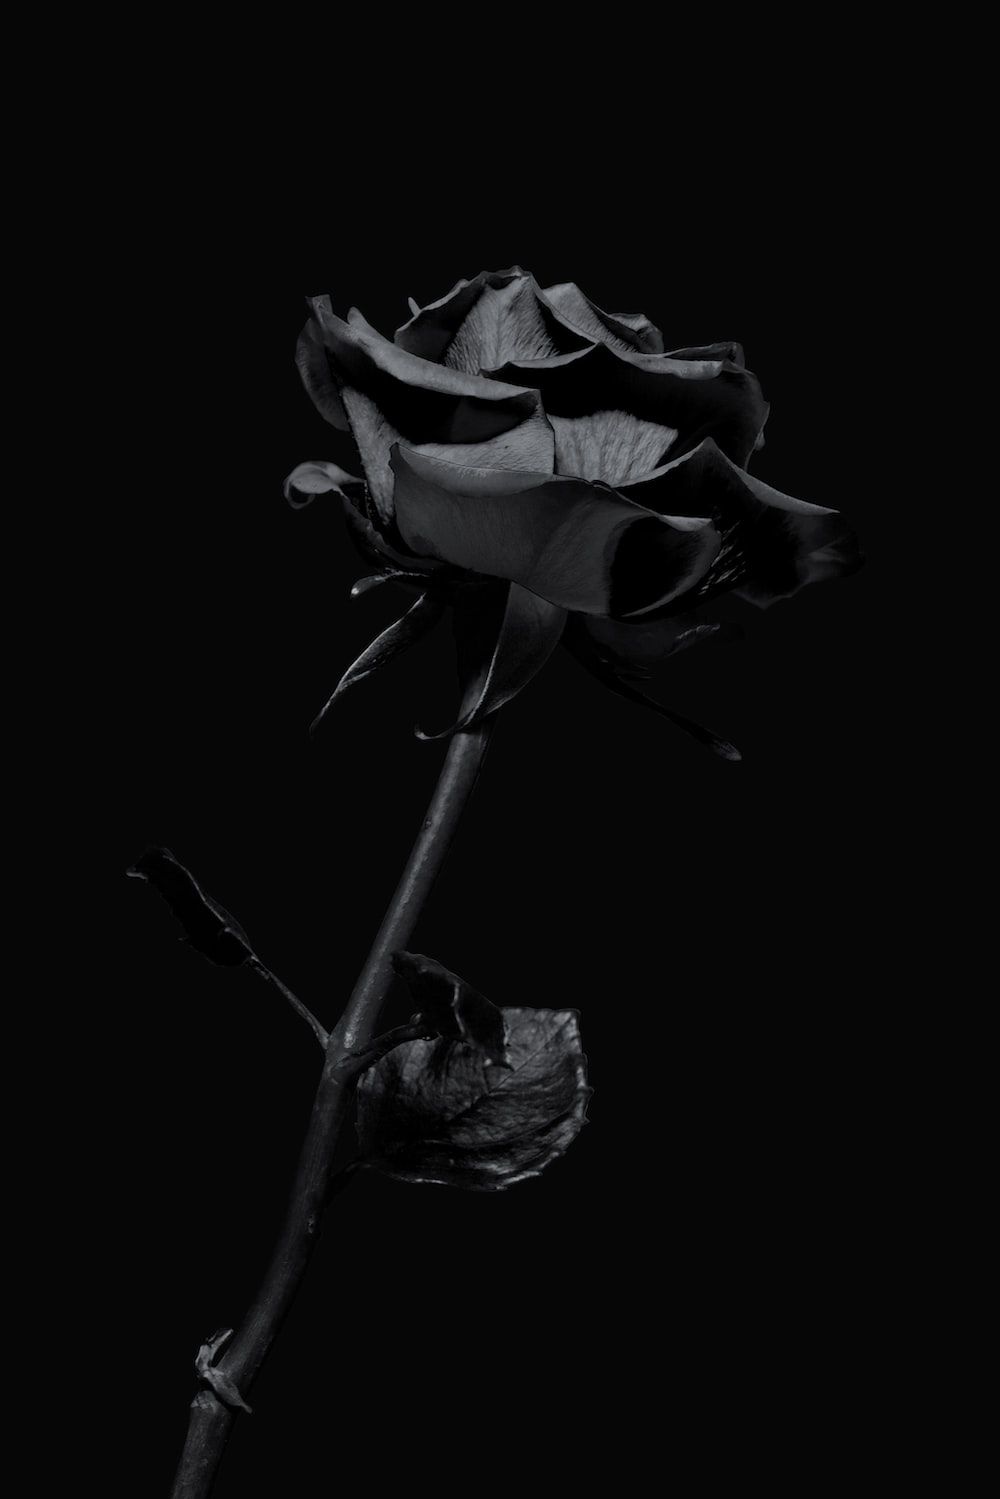 Black Rose Picture. Download Free Image